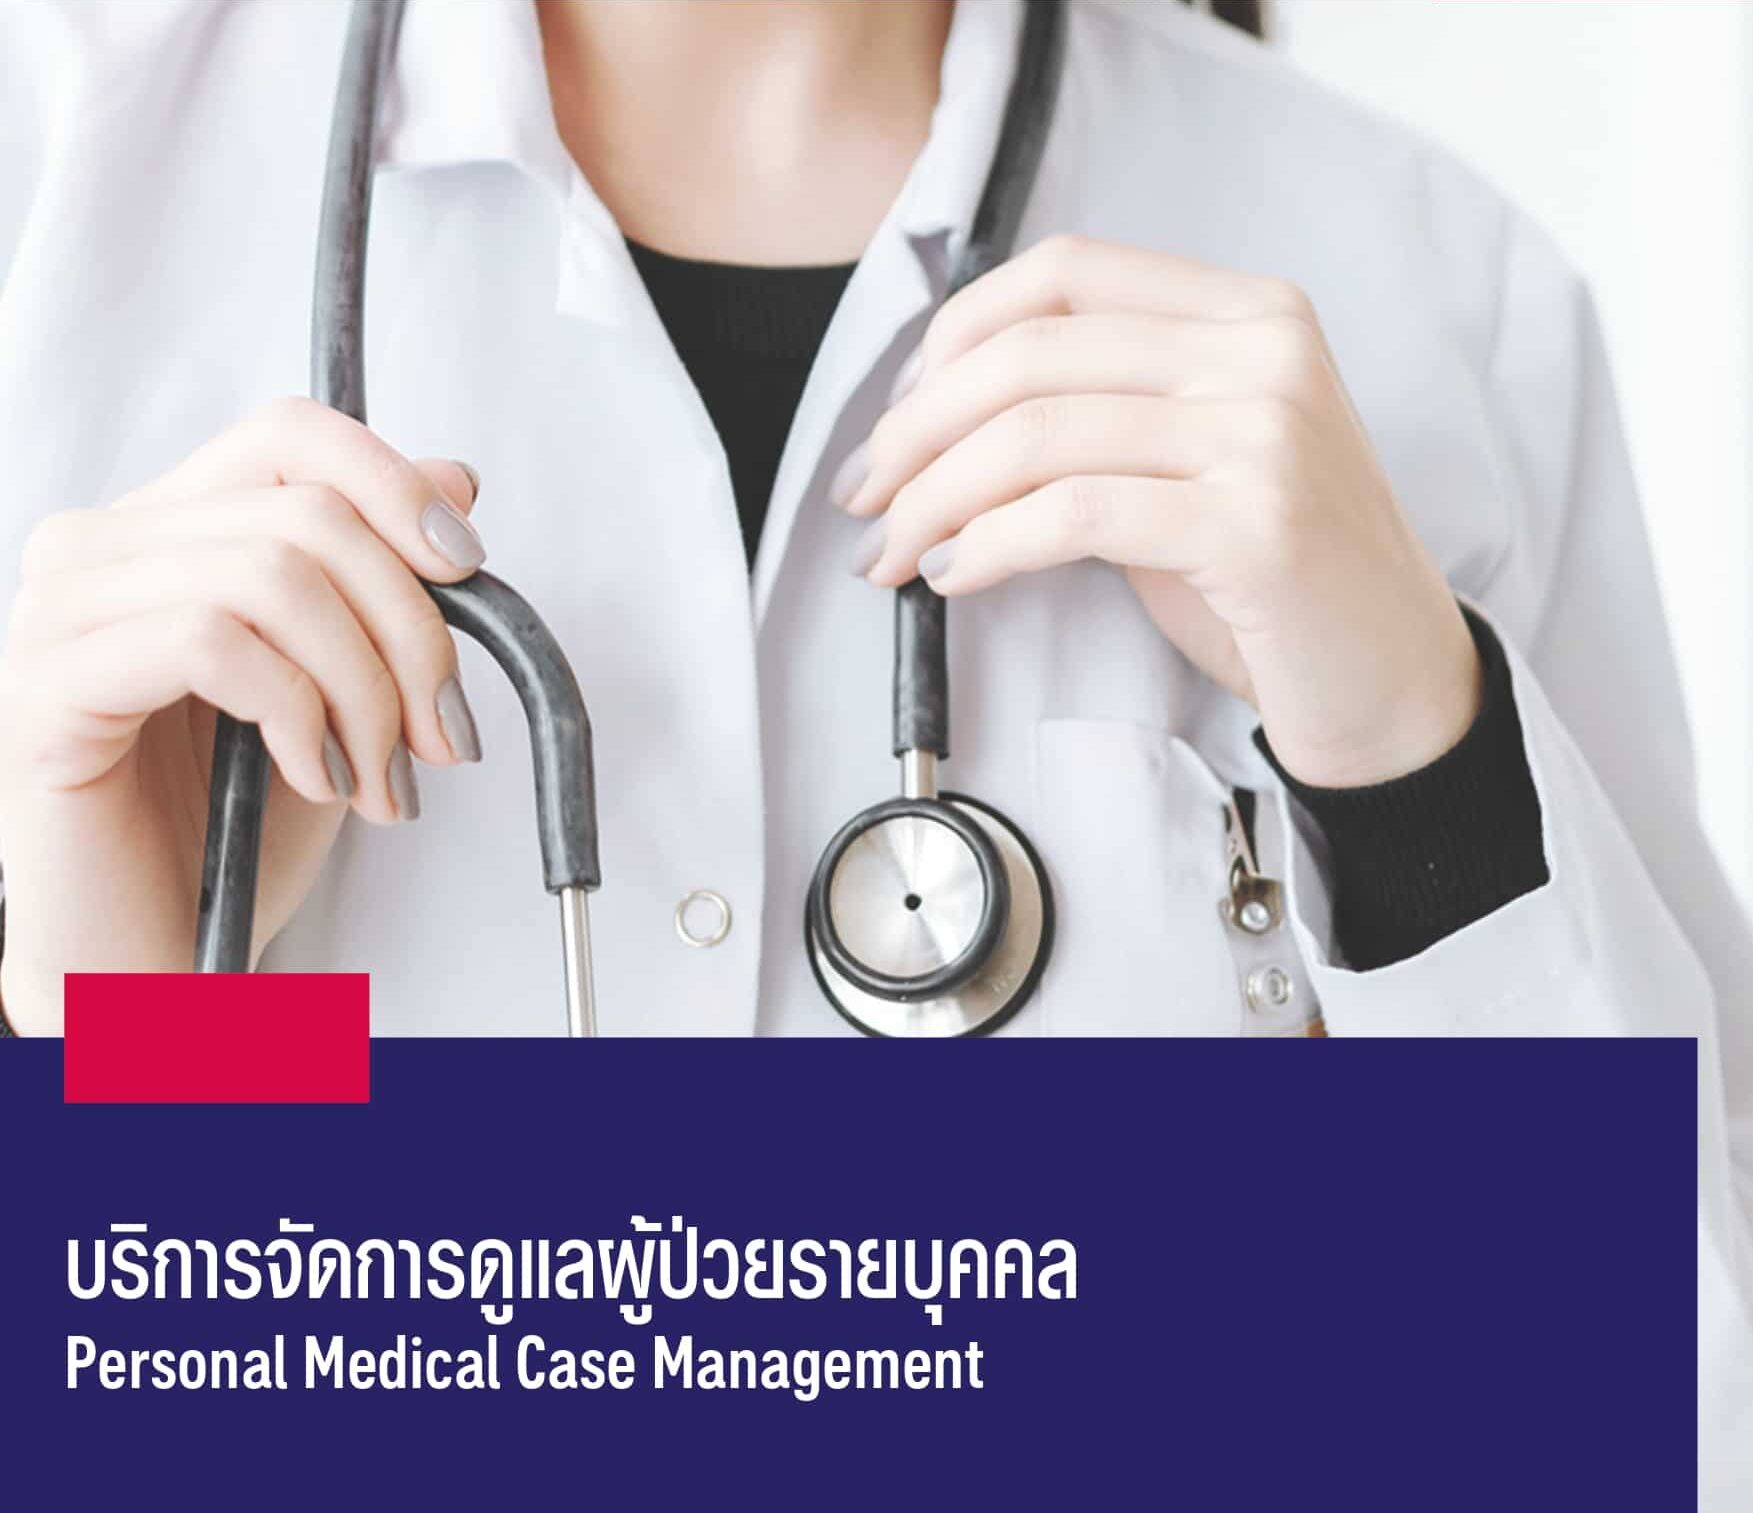 Personal Medical Case Management